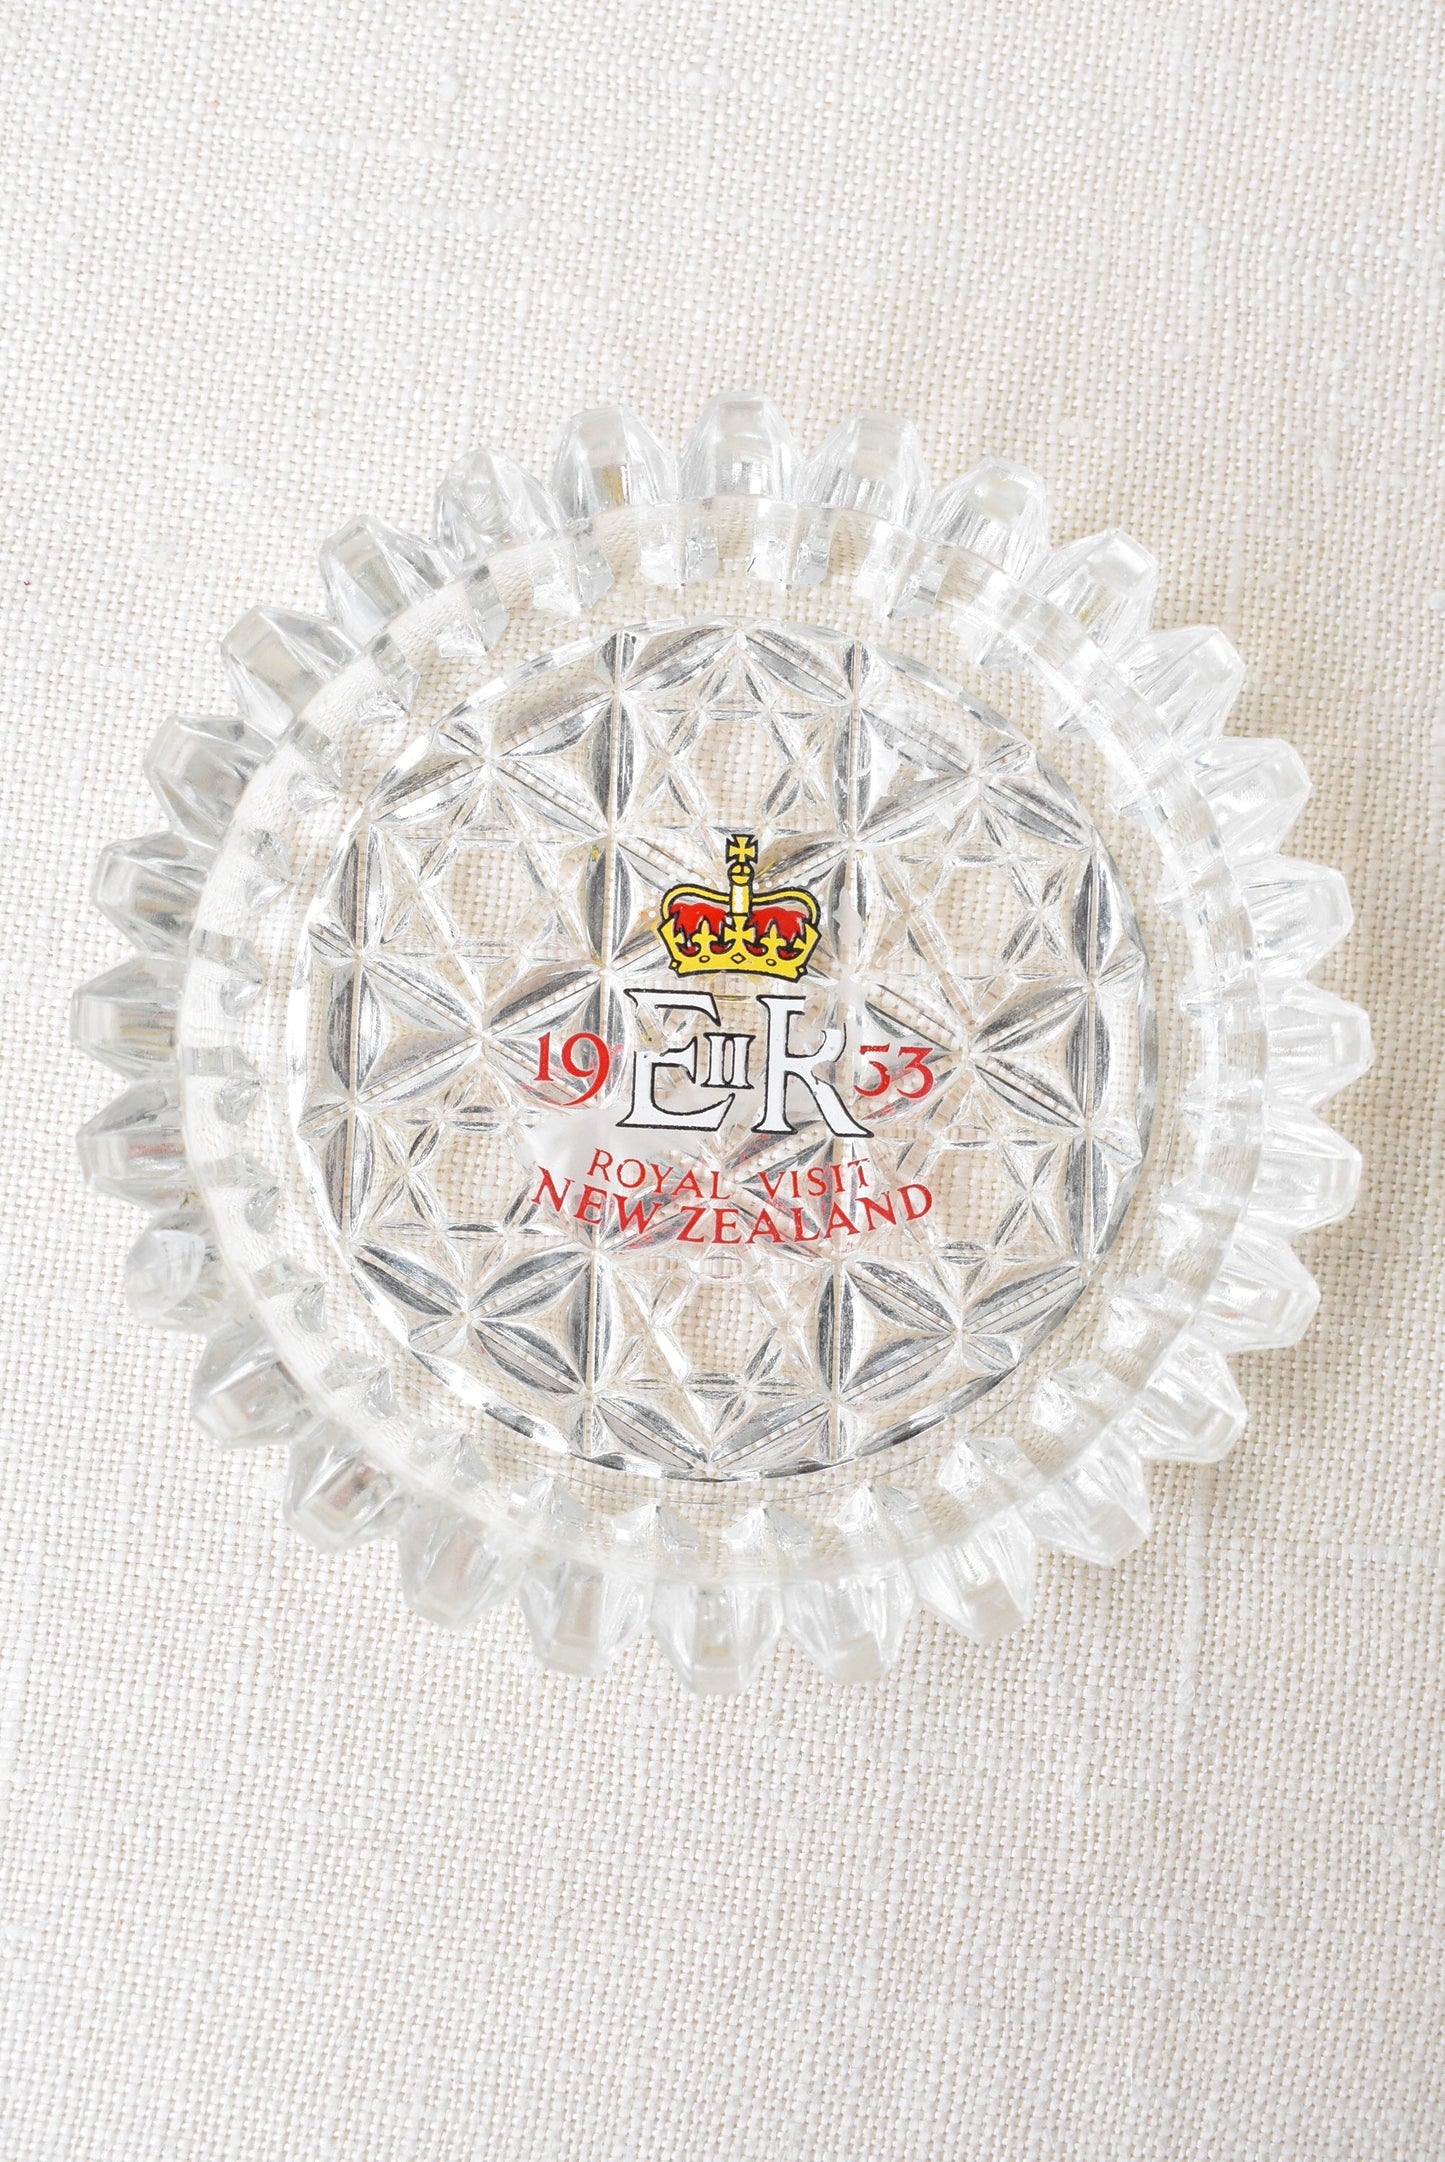 Royal Visit 1953 glass coaster in red velveteen box